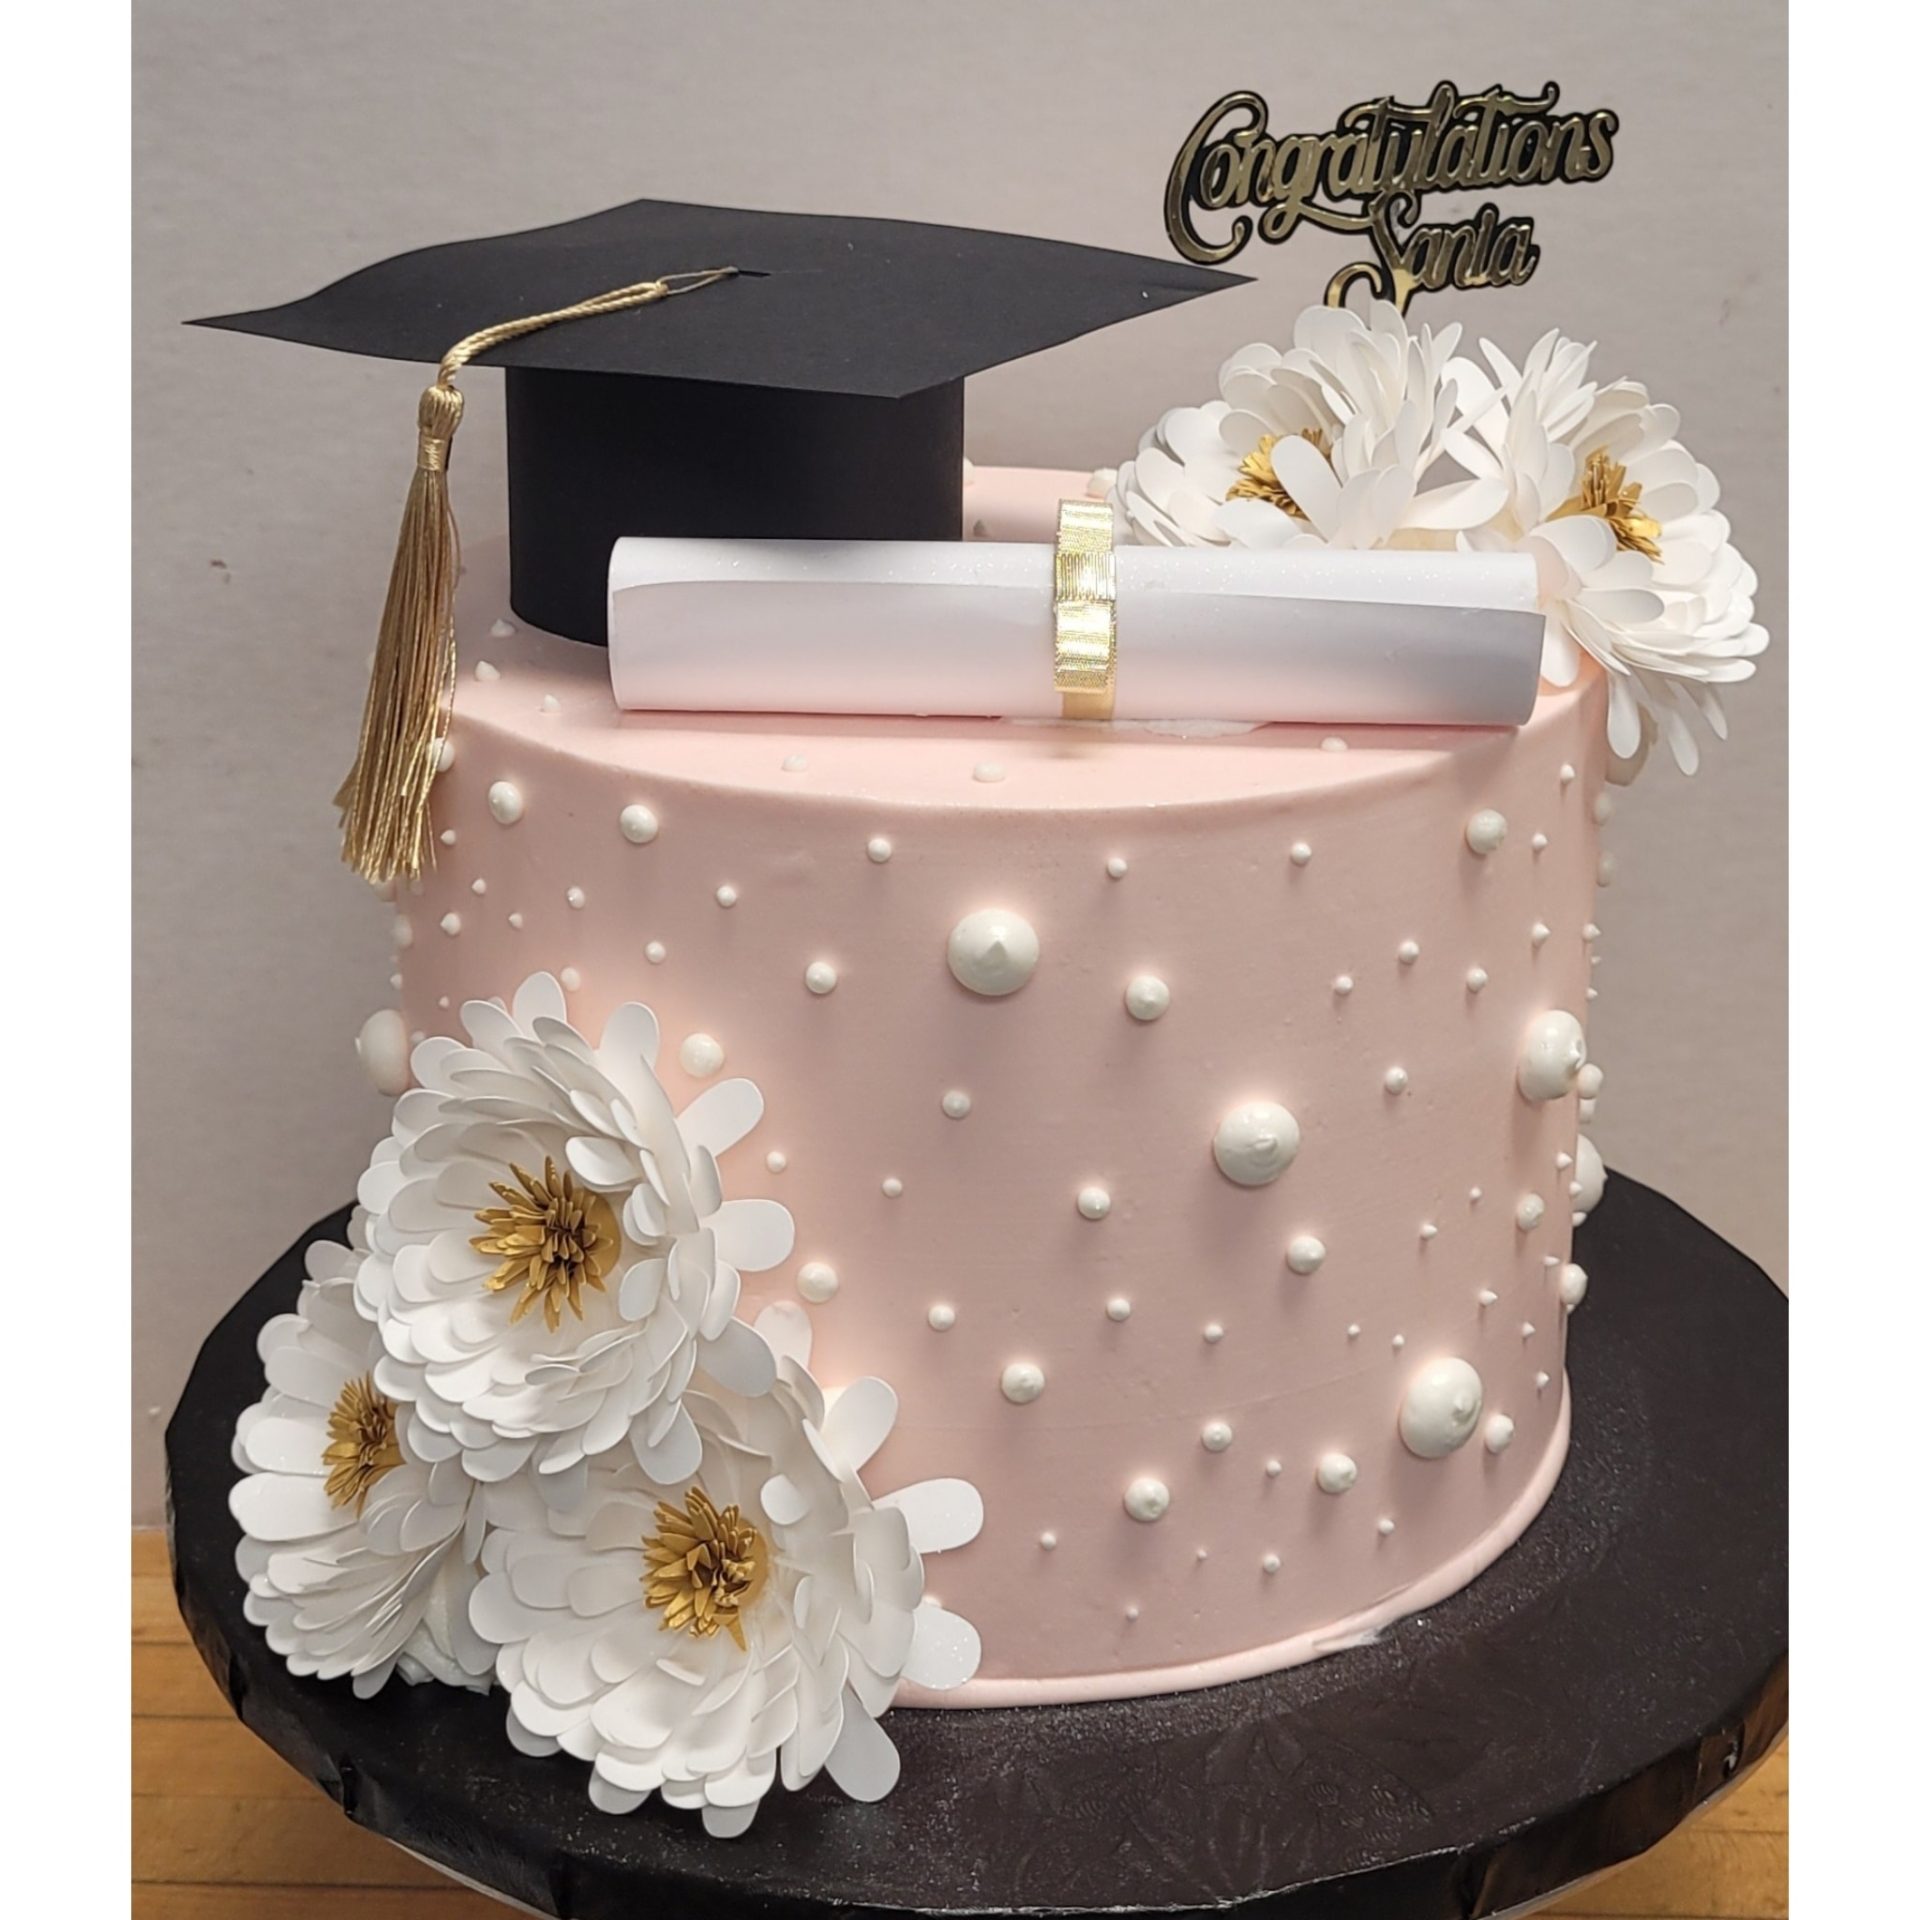 Graduation cake - blush color